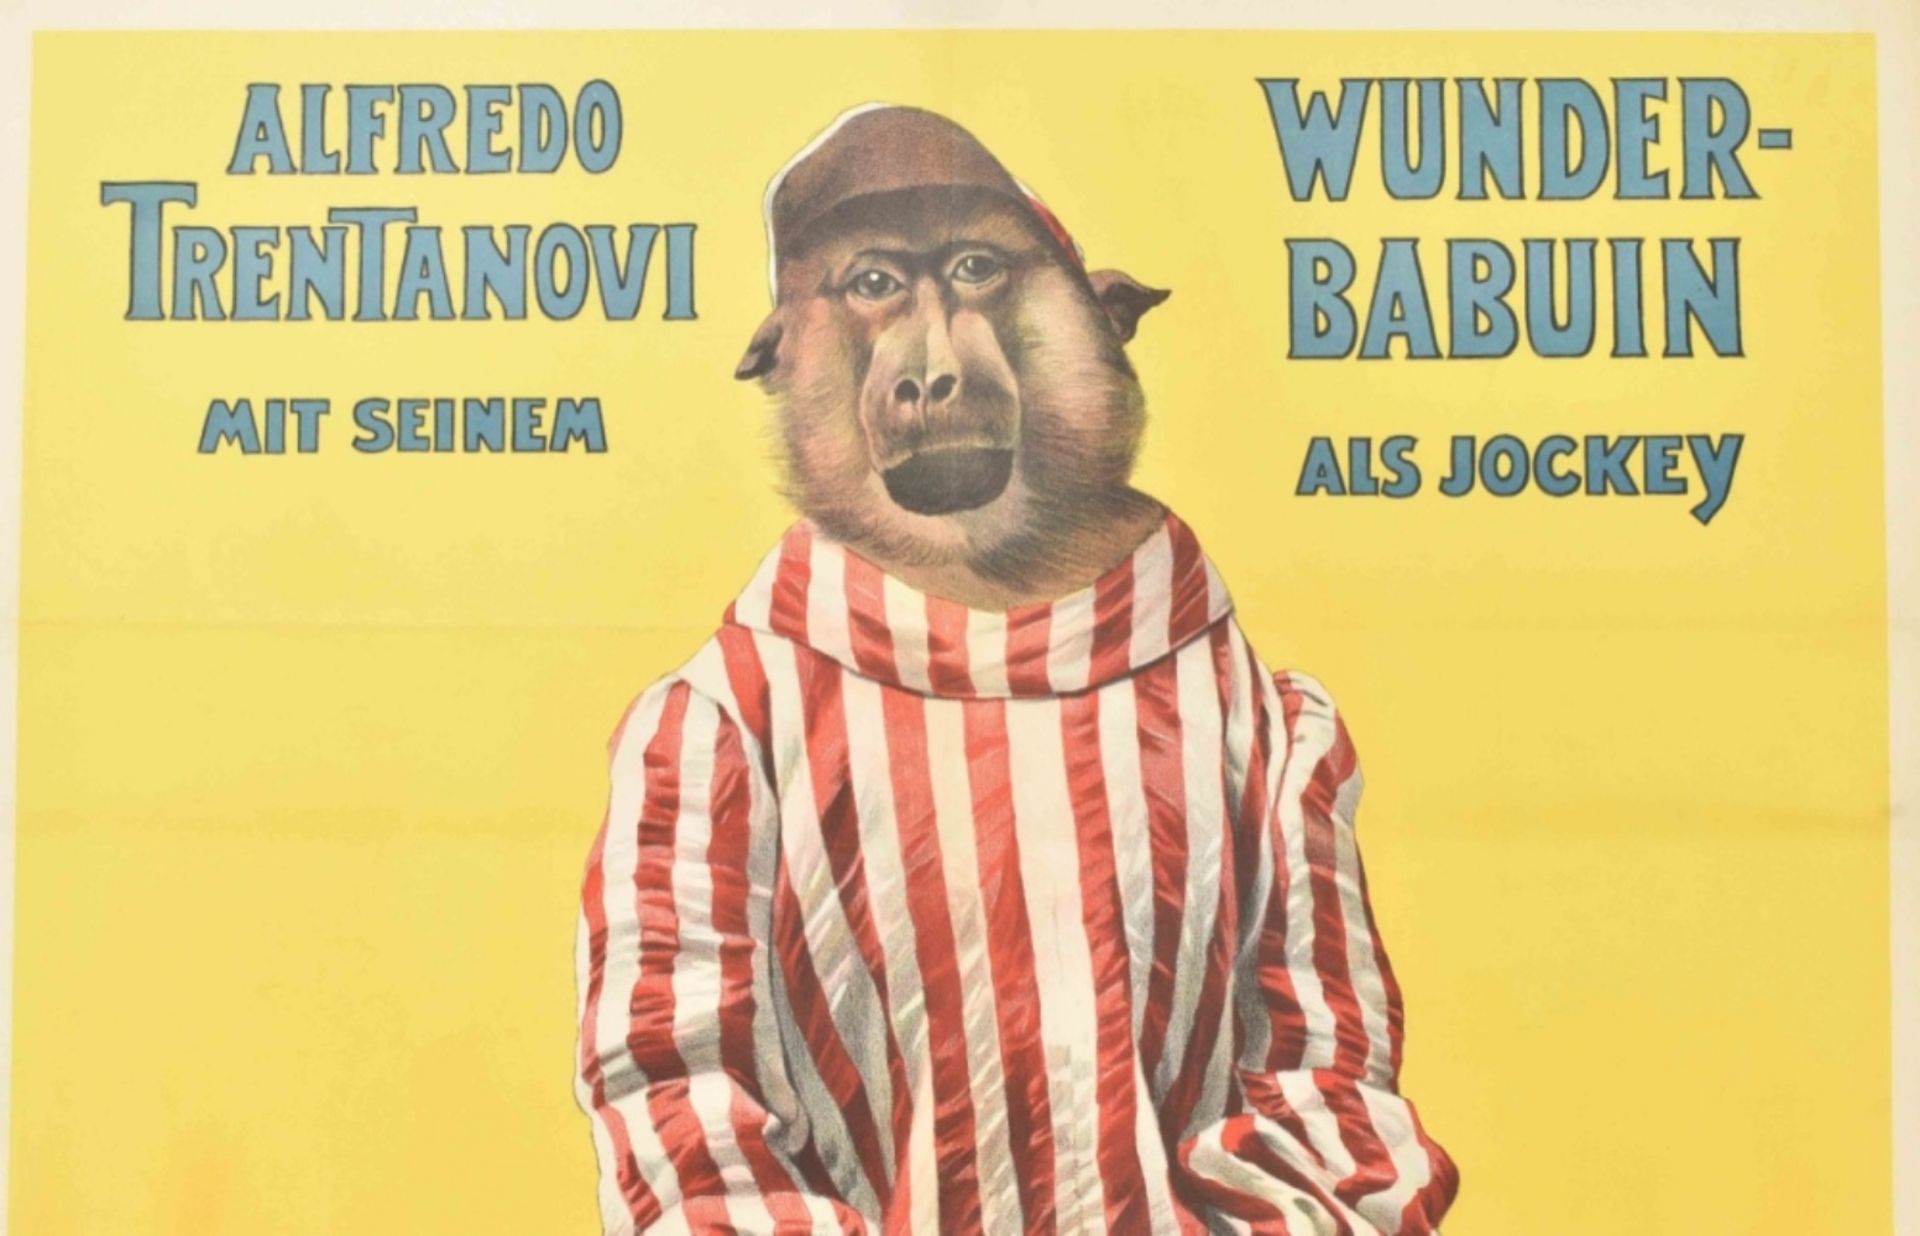 [Animal Dressage/Monkeys] Alfredo Trentanovi mit Wunderbabuin als Jockey [..] Friedländer, 1906 - Image 4 of 4